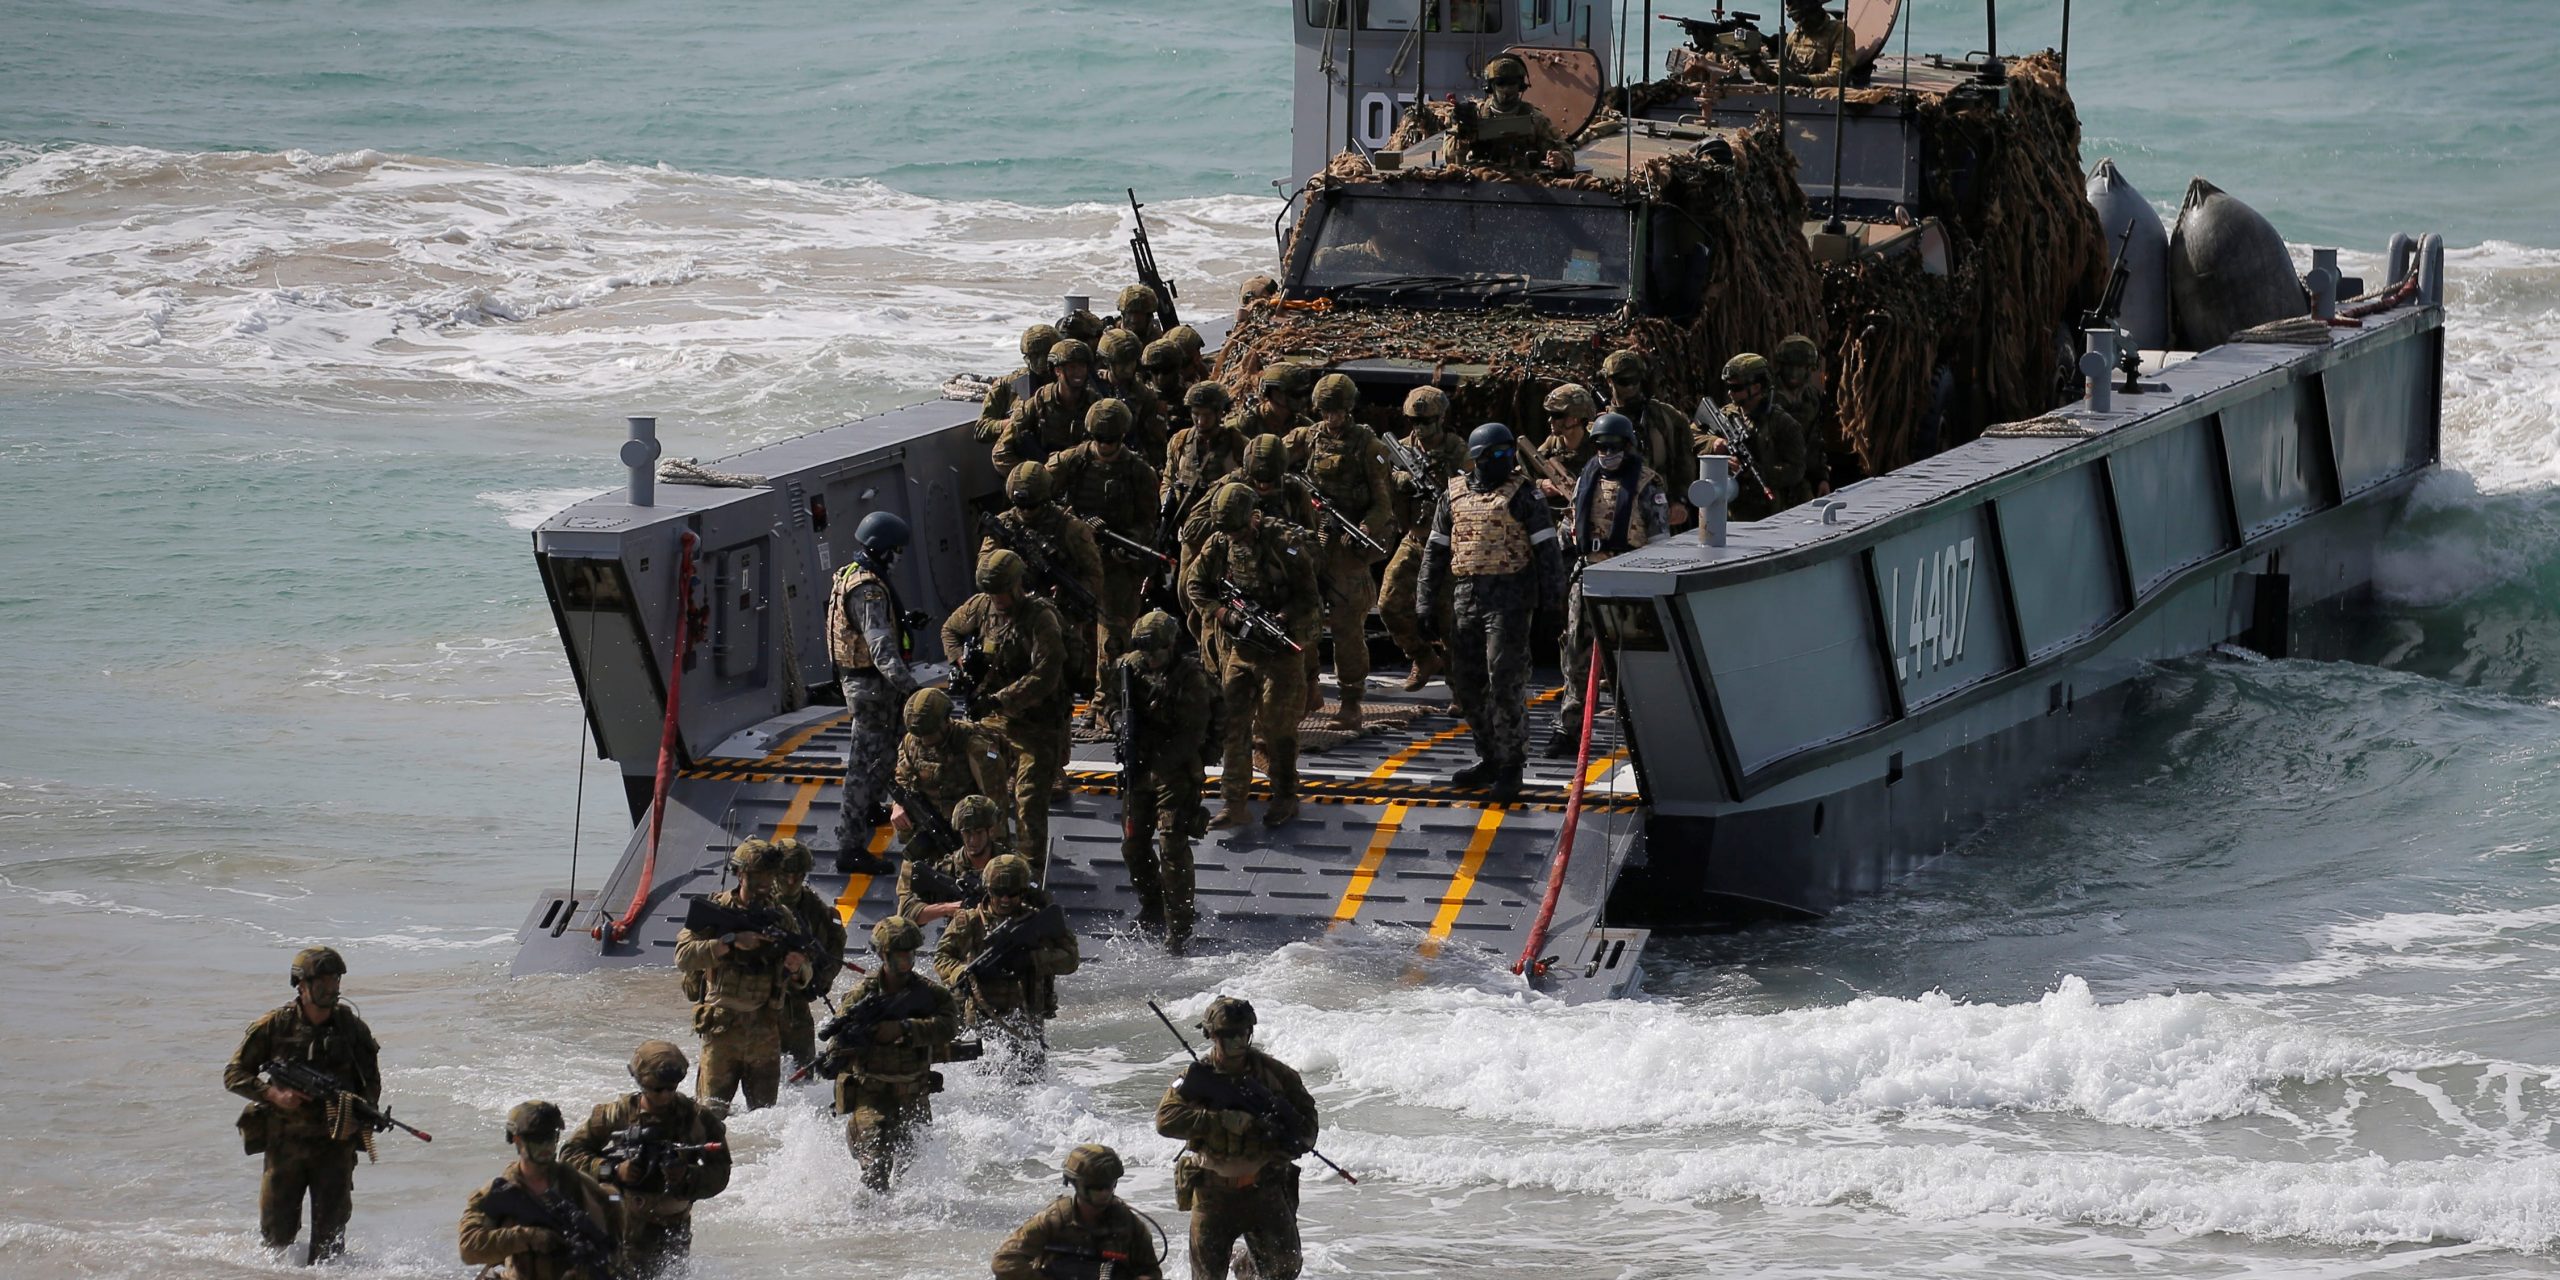 Australia army beach landing